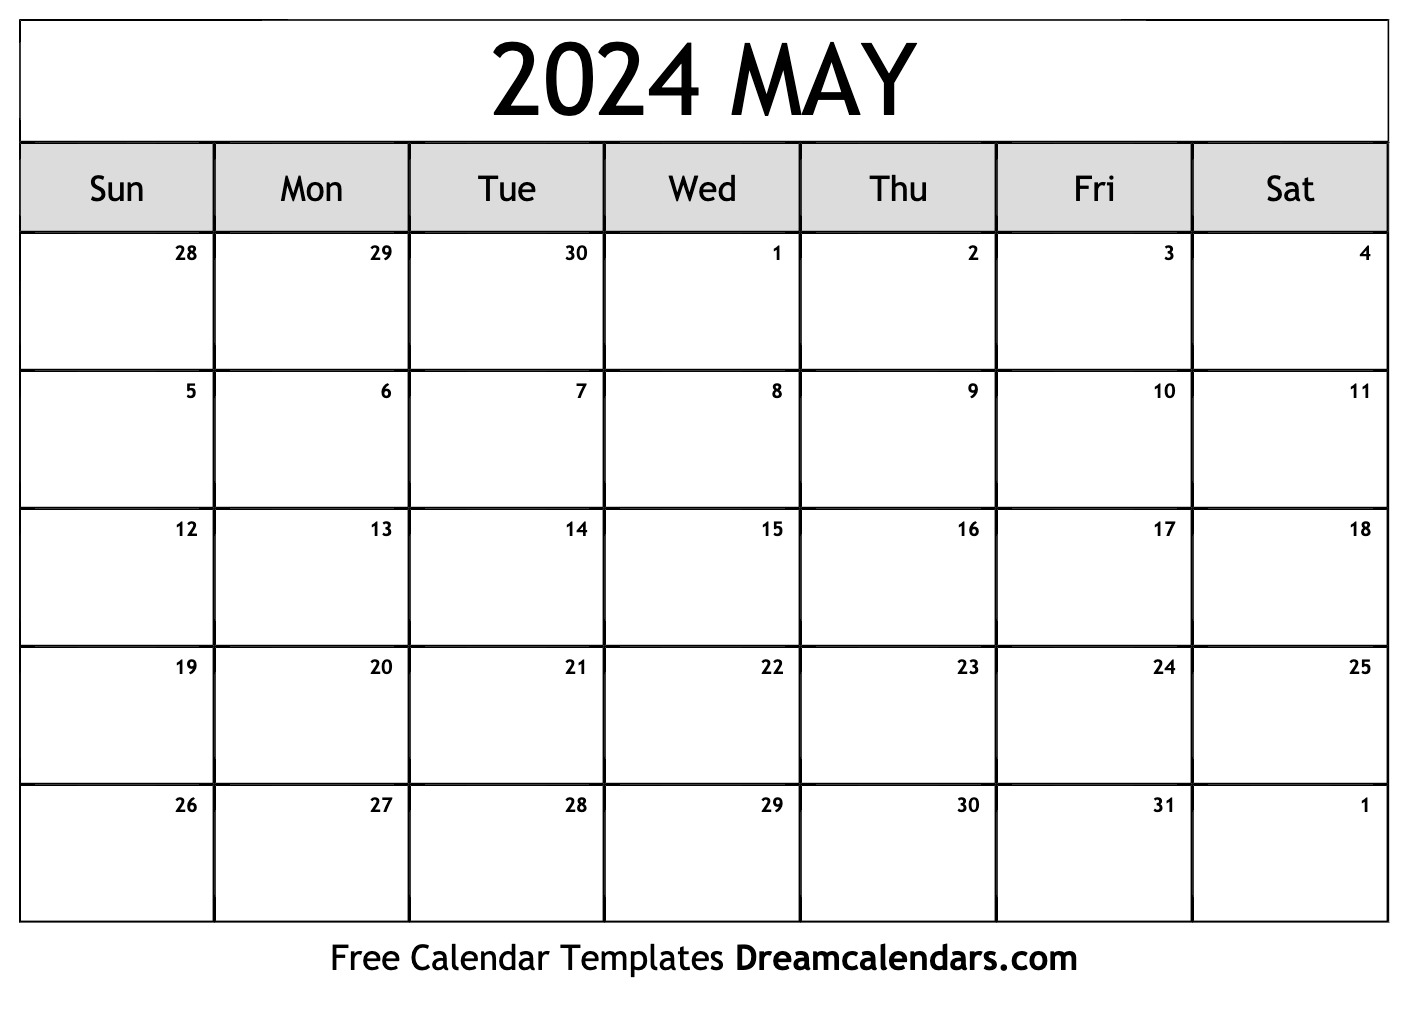 calendar-printable-monthly-calendar-planner-calendar-pens-pencils-blue-box-may-browser